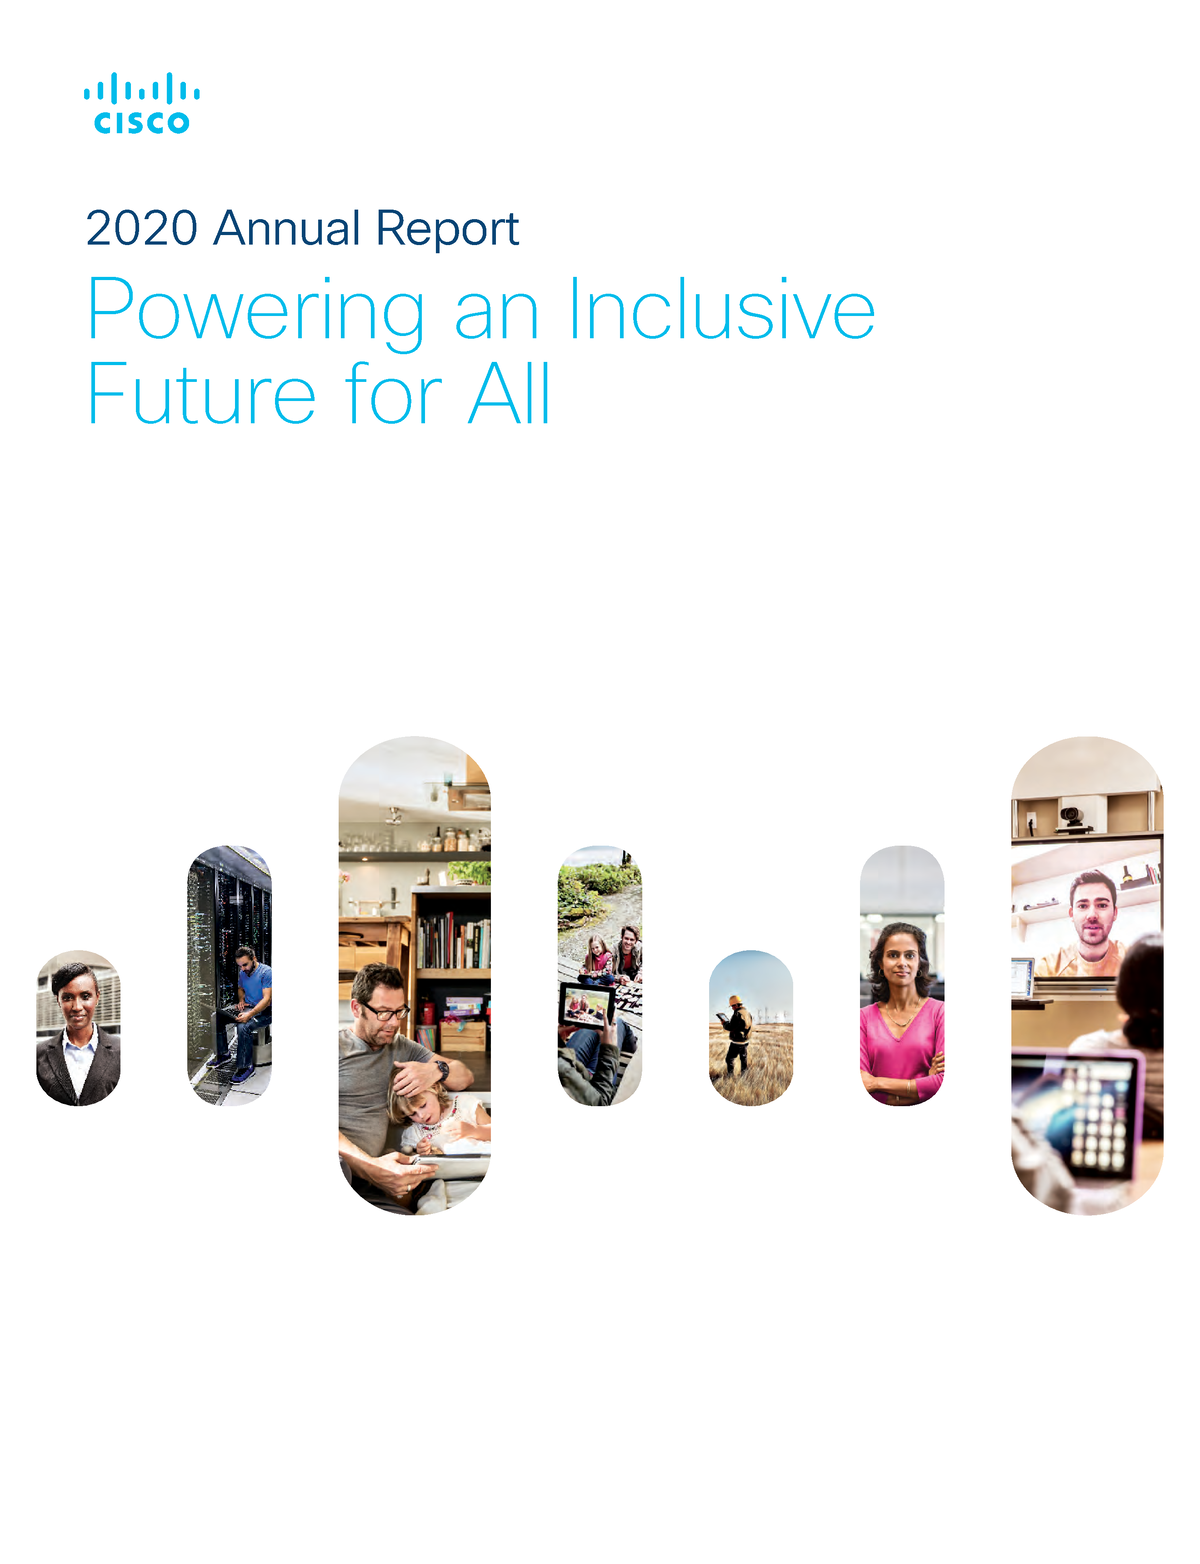 Cisco annual report 2020 2020 Annual Report Powering an Inclusive